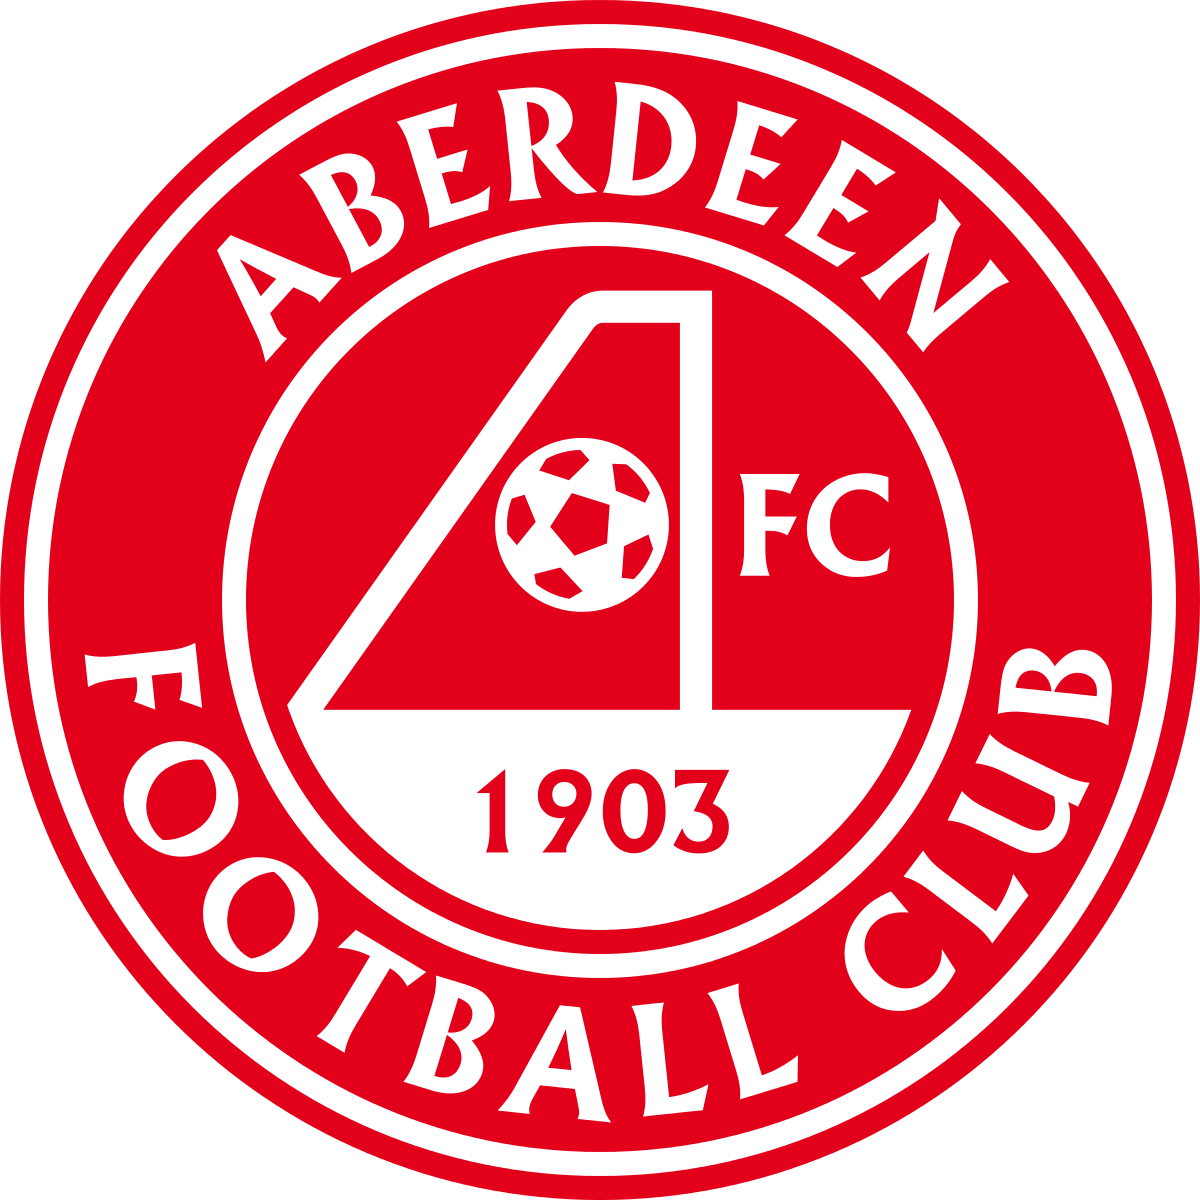 Places Aberdeen FC